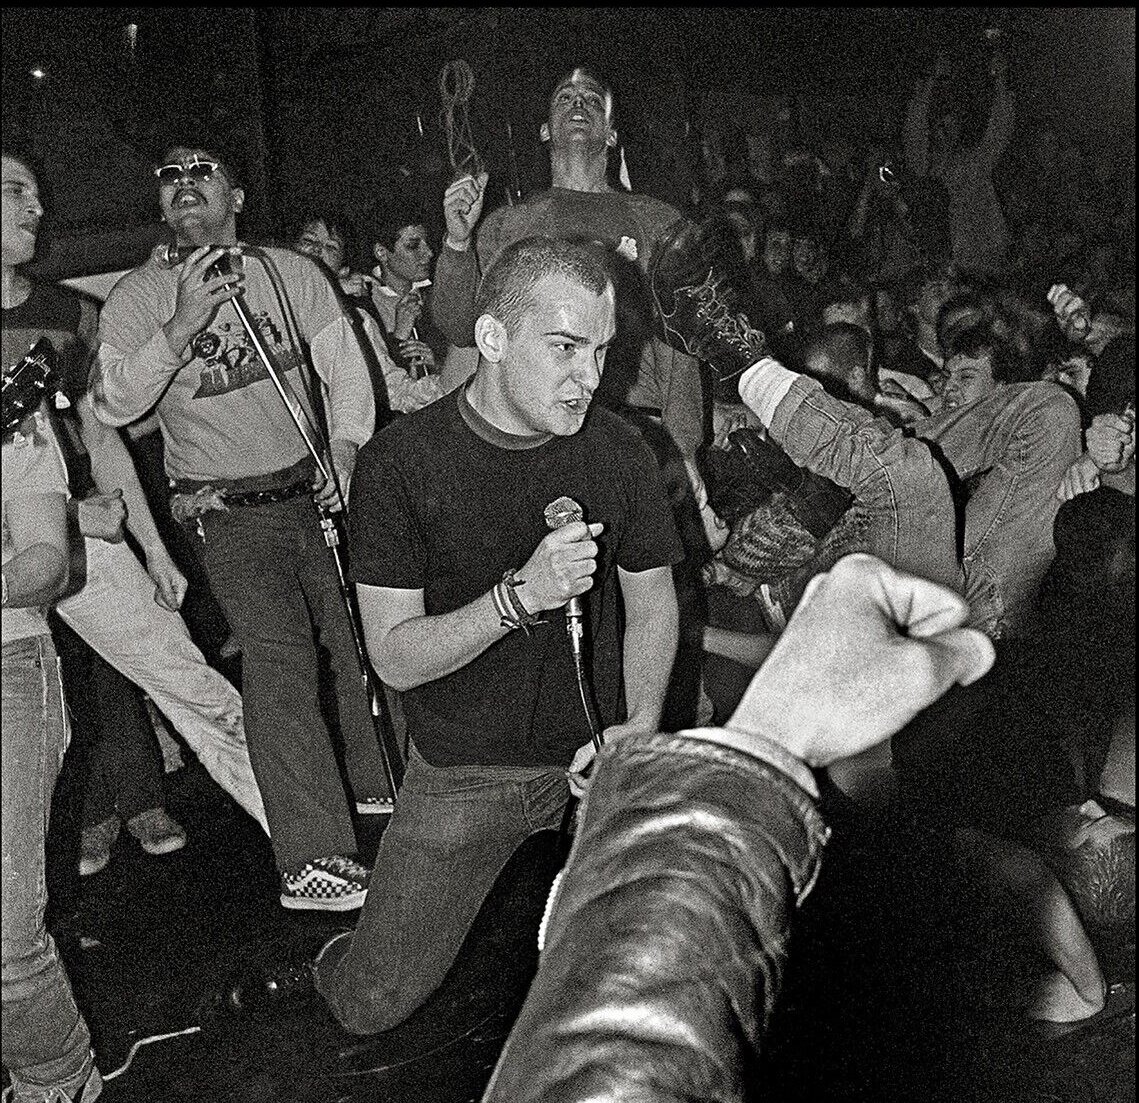 Minor Threat, CBGB, by Glen E. Friedman